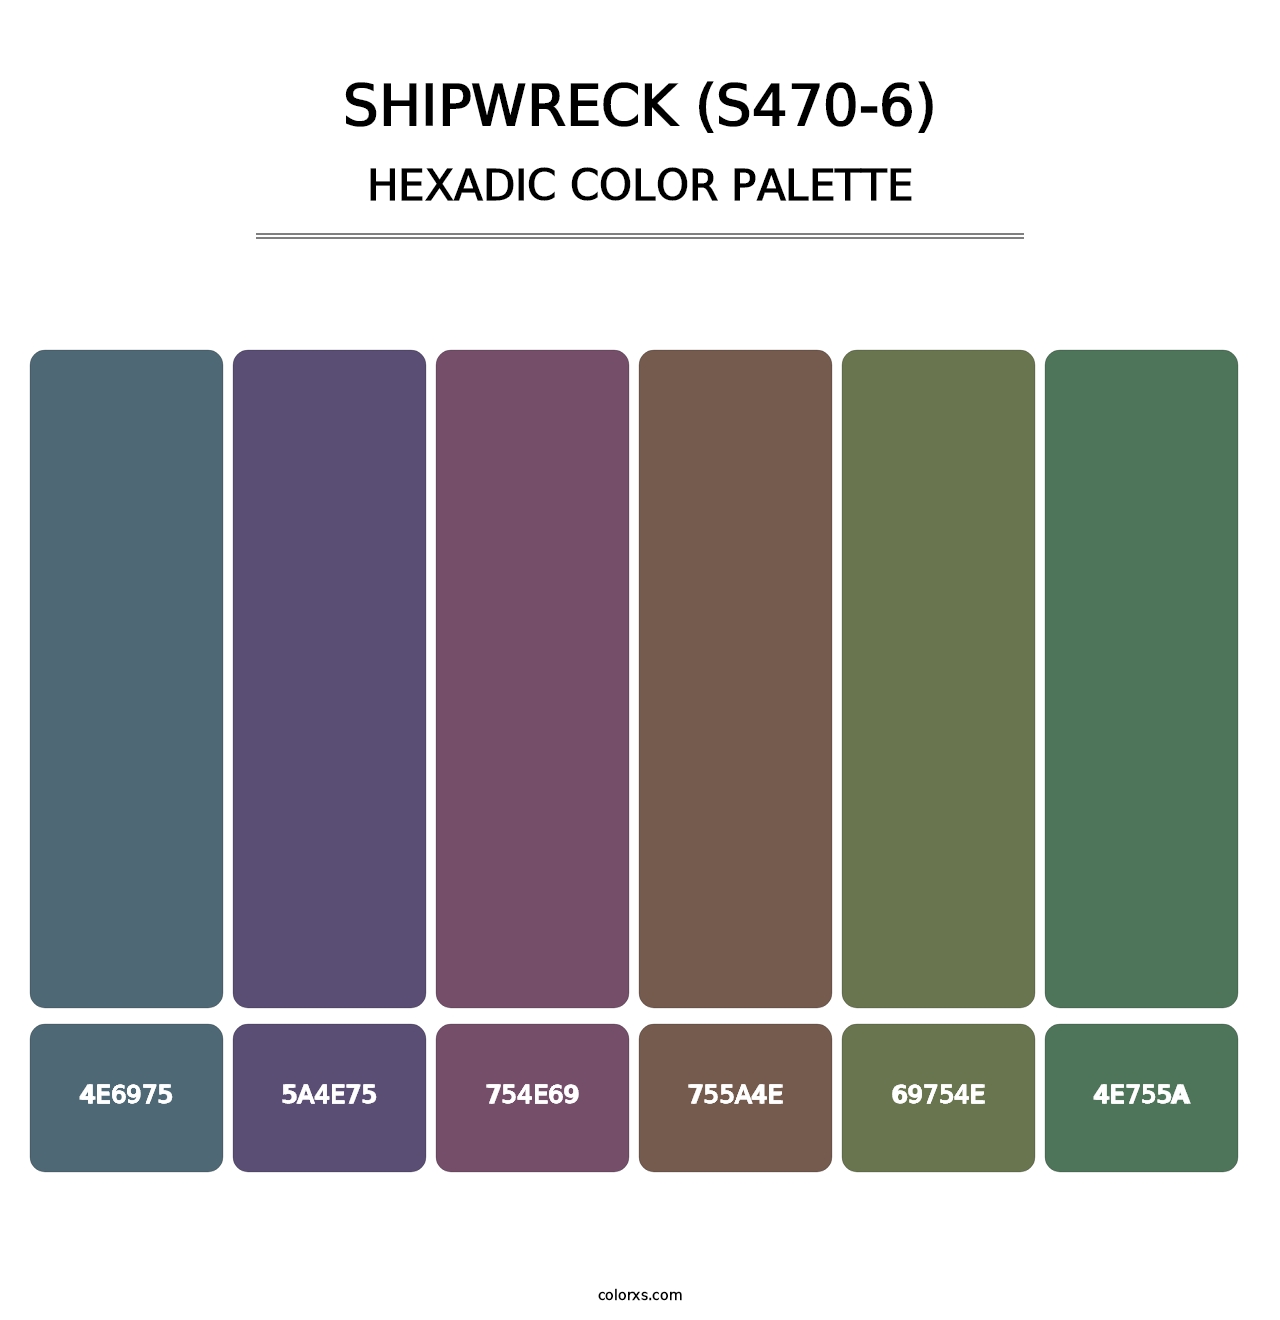 Shipwreck (S470-6) - Hexadic Color Palette